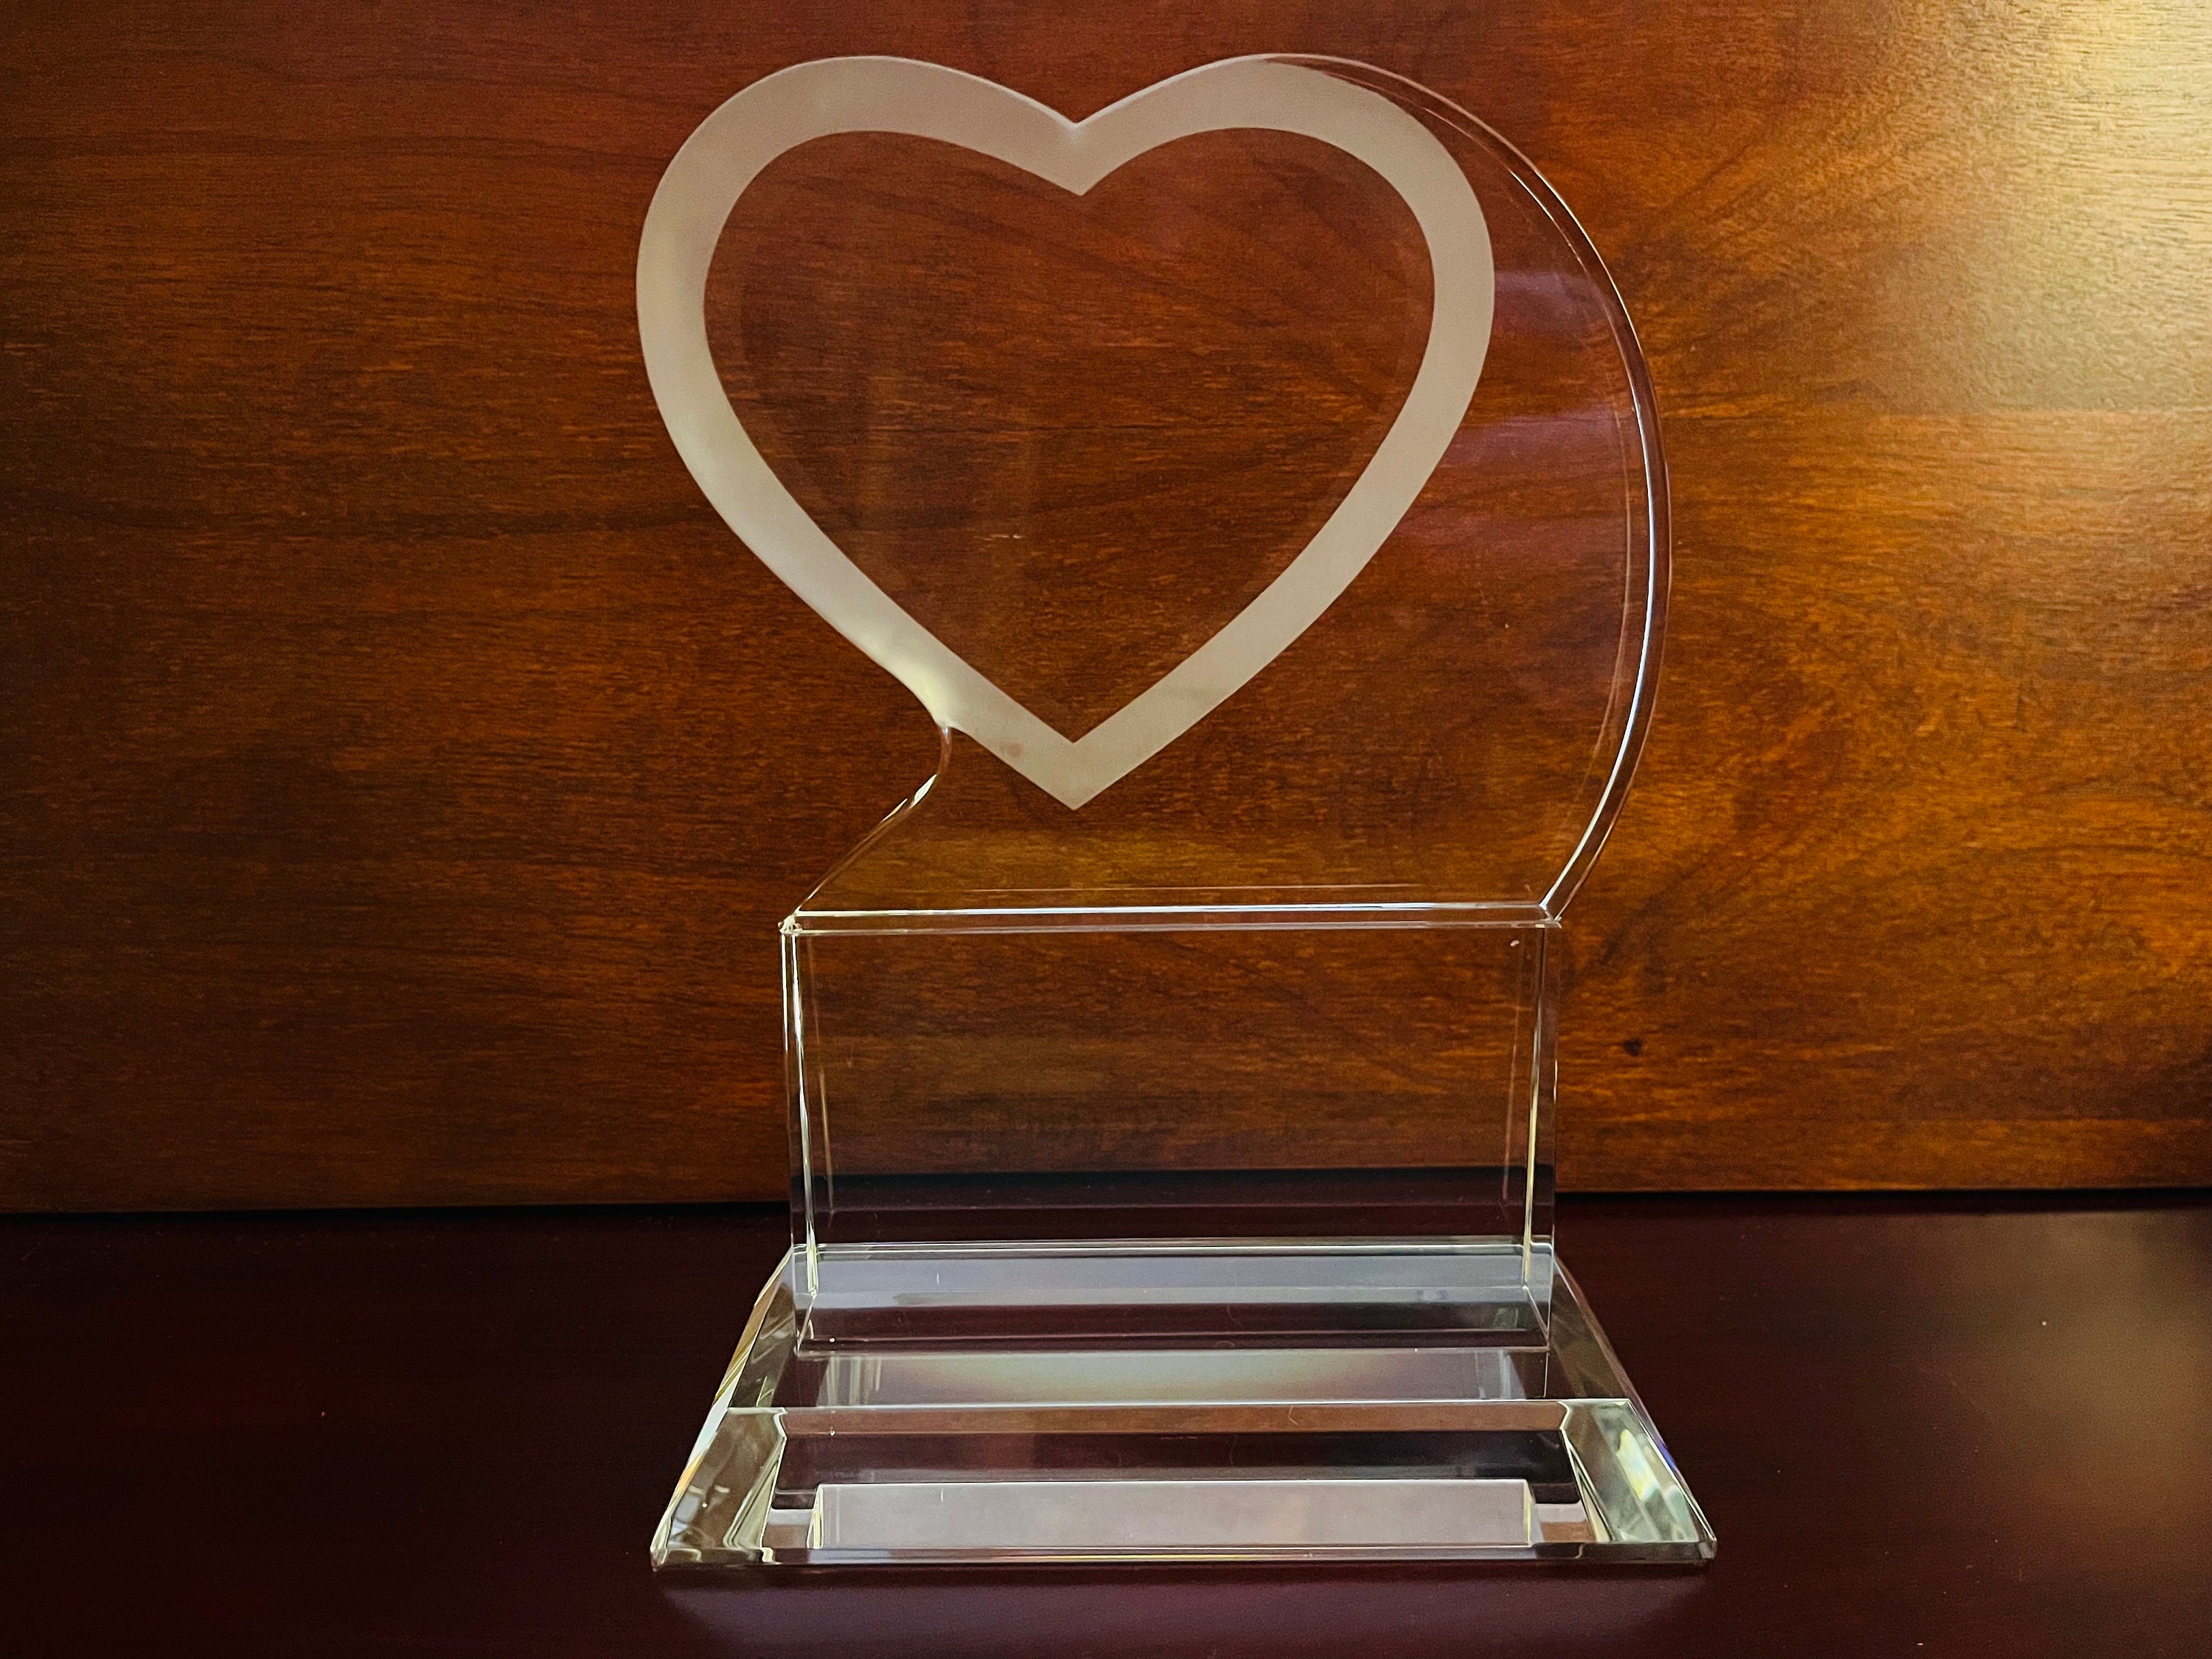 Acrylic Heart Paperweight Award